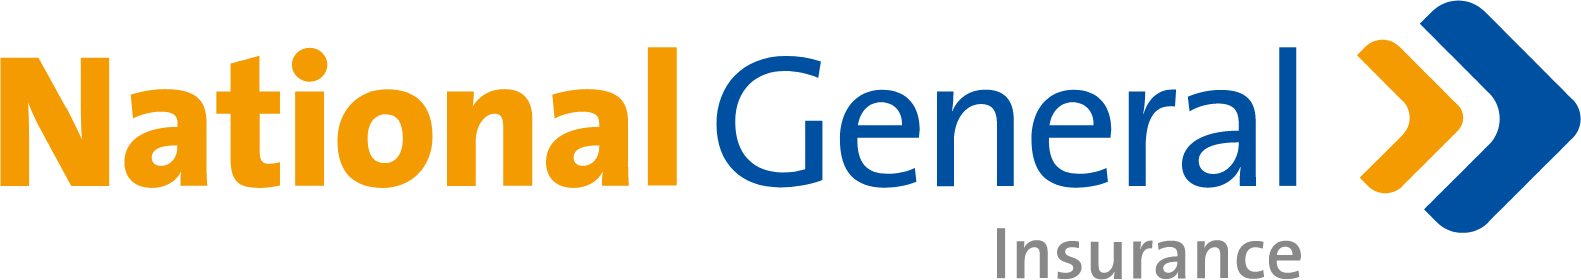 National General Holdings
 logo large (transparent PNG)